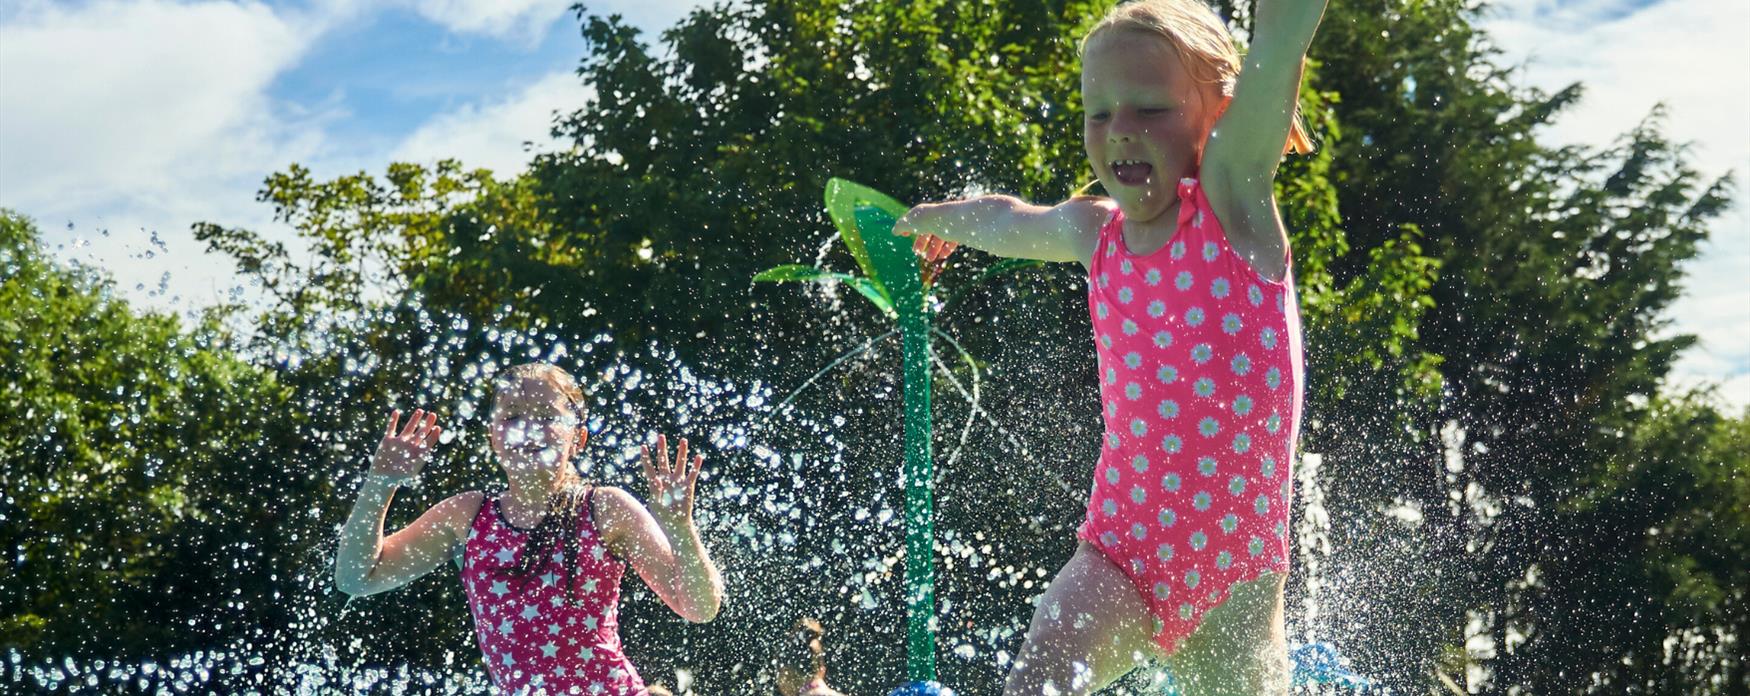 Kids playing in splash area at Drusillas park